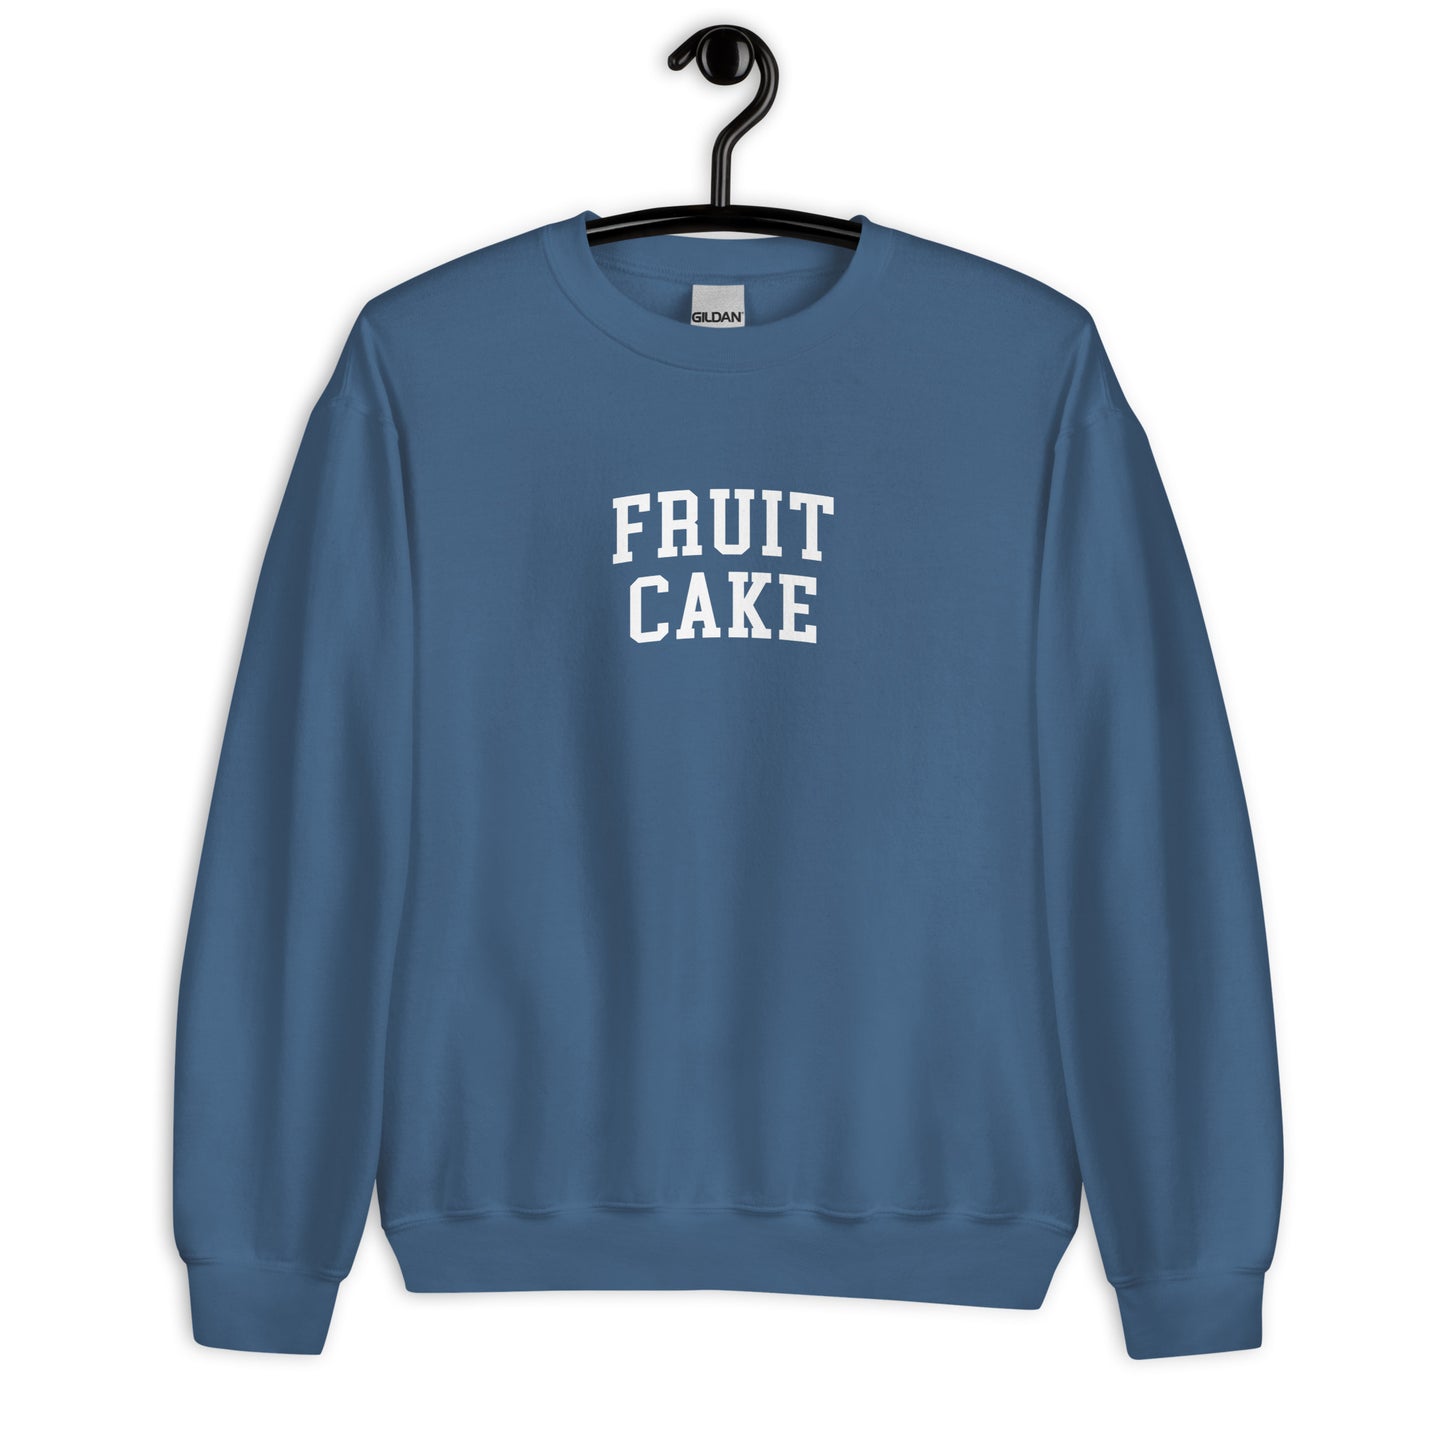 Fruit Cake Sweatshirt - Arched Font